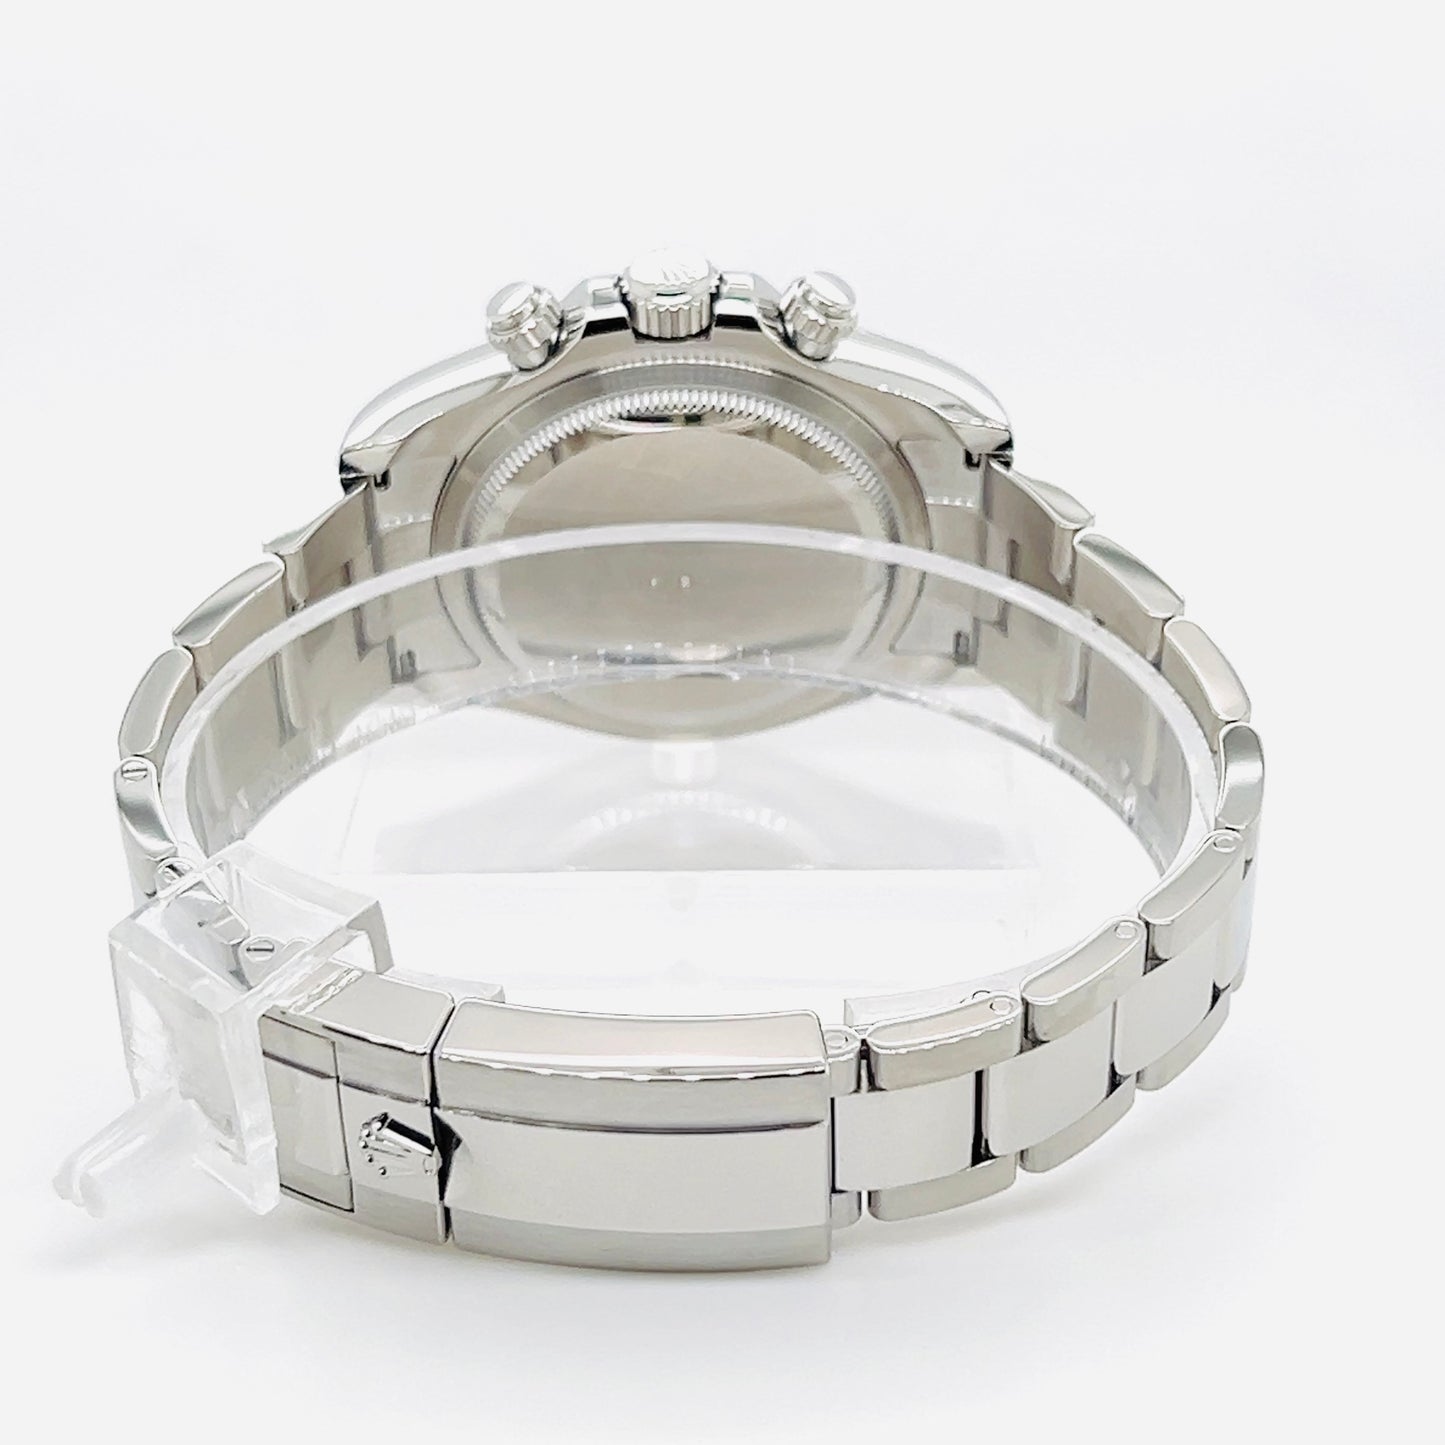 Rolex Cosmograph Daytona Panda Dial Stainless Steel Men's Watch, Model #126500LN